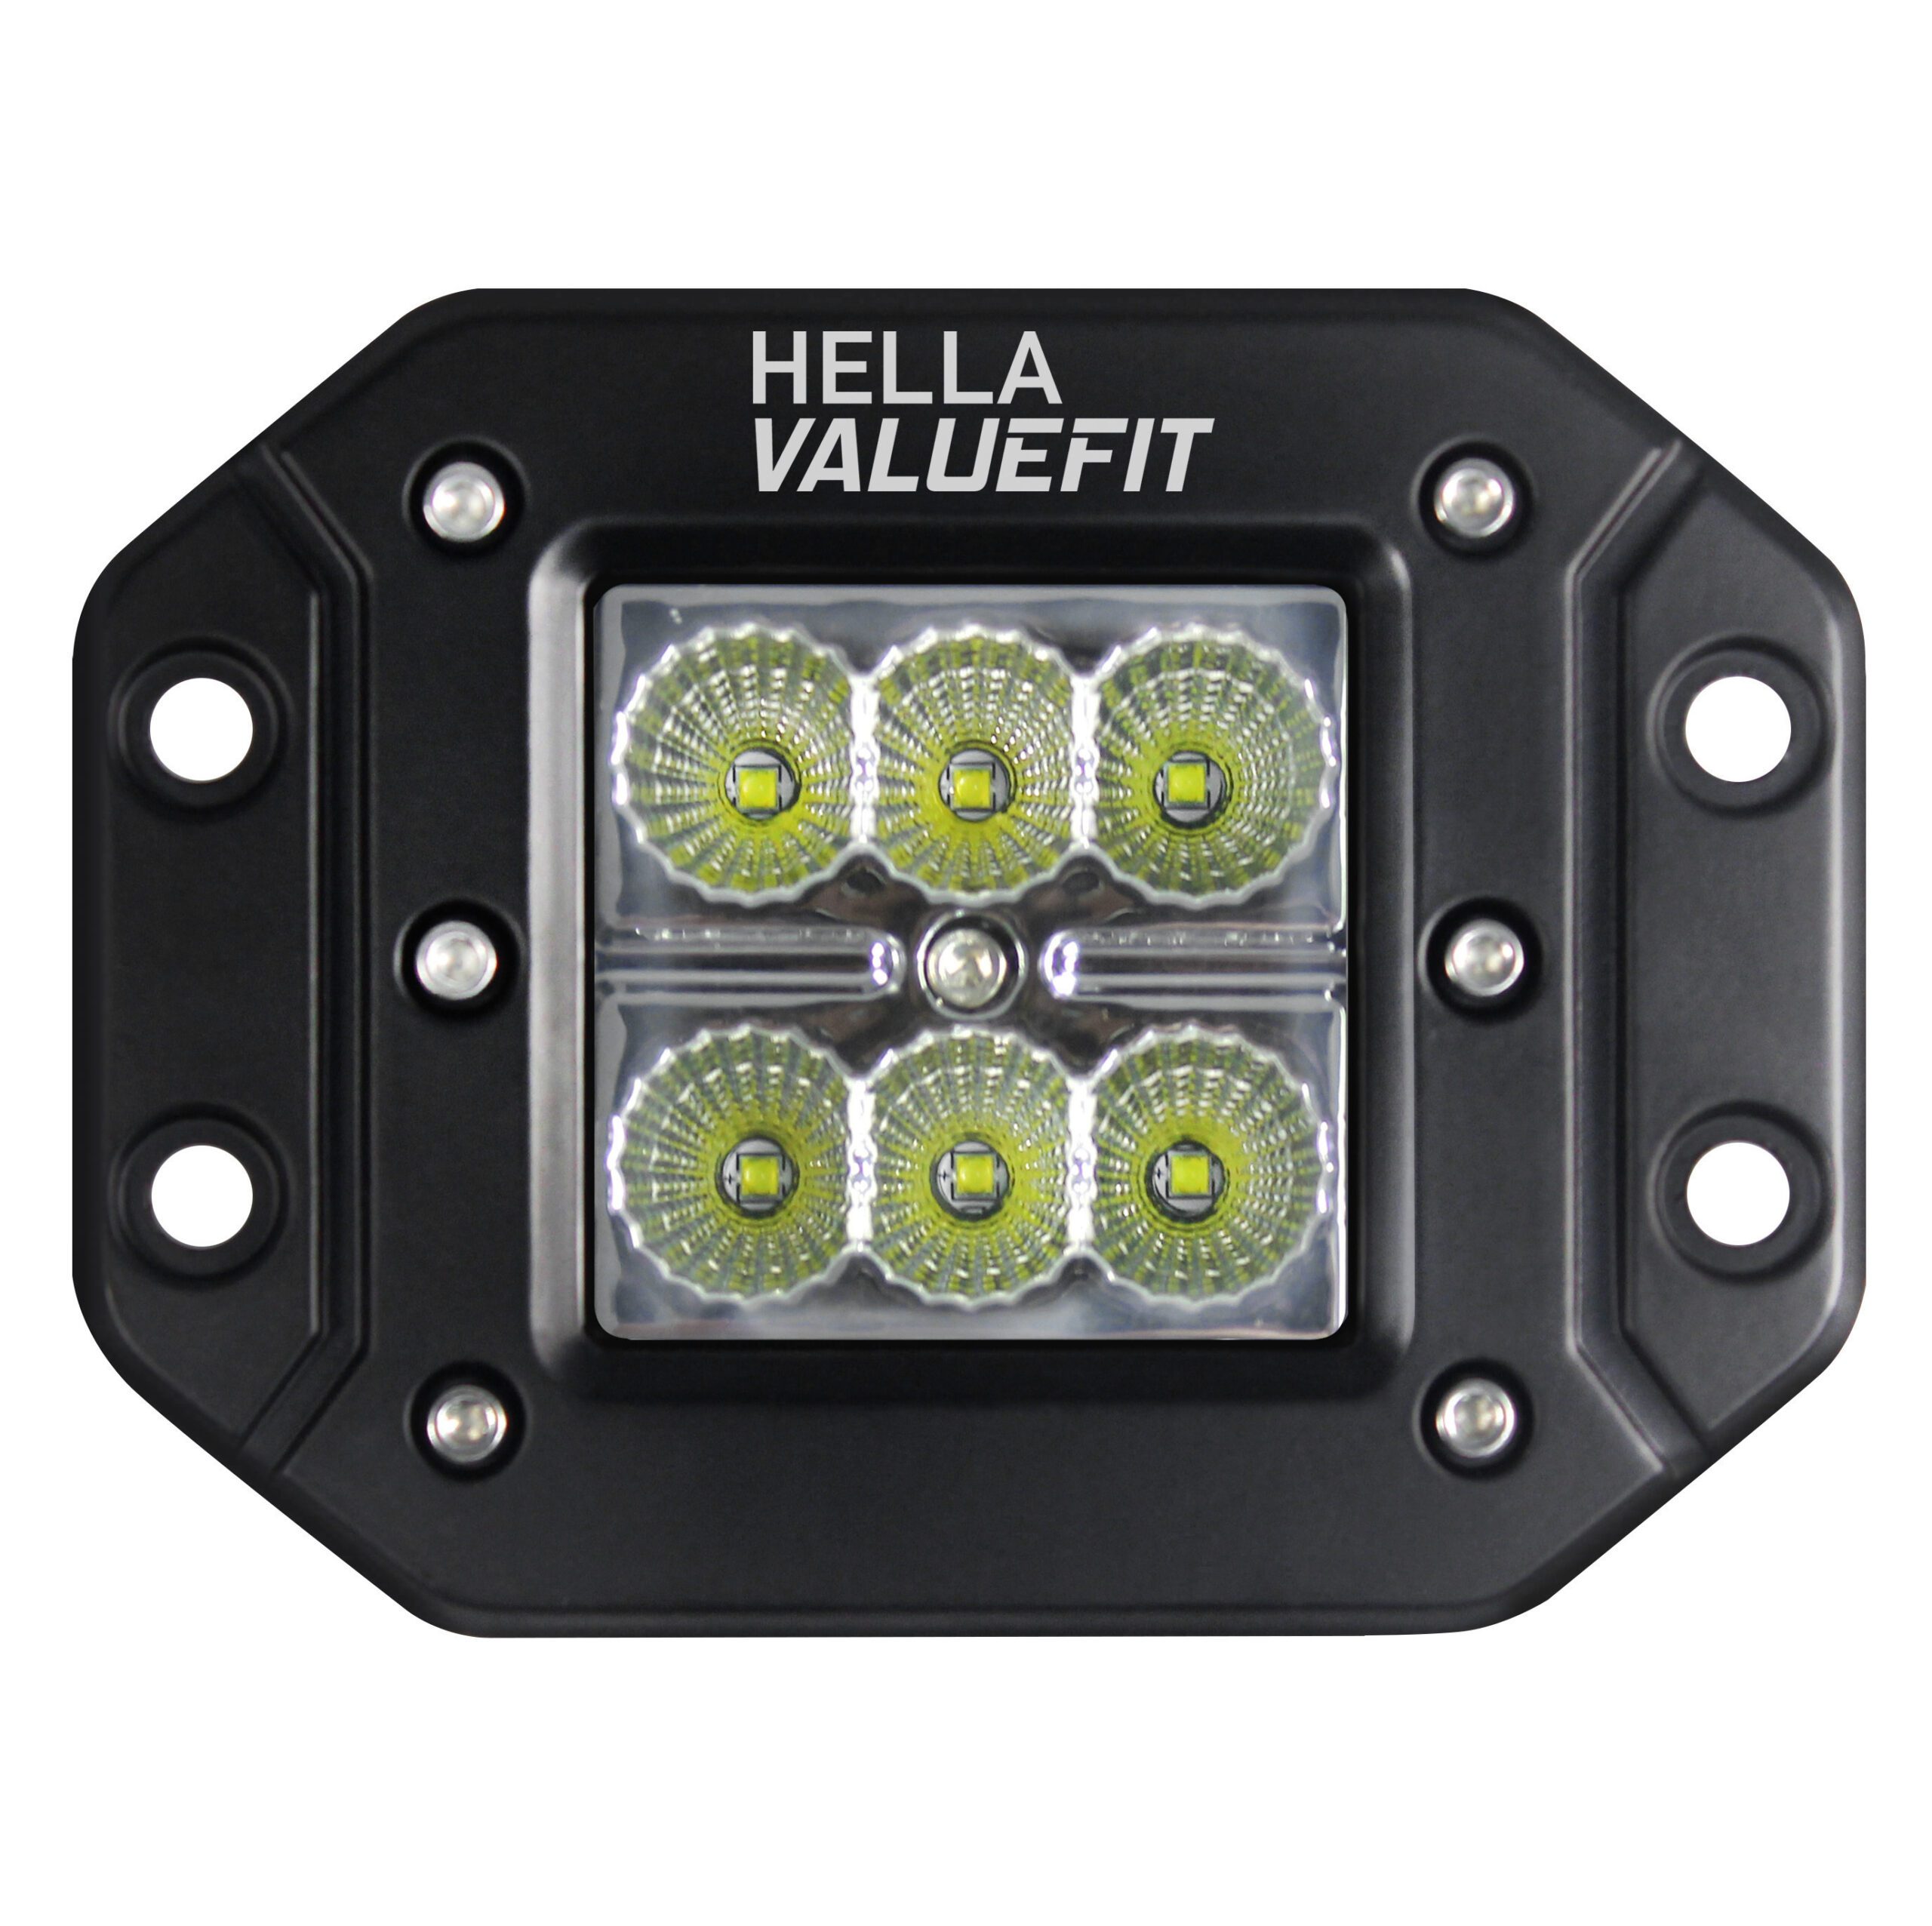 HELLA VALUEFIT LED work light - Car Work Light